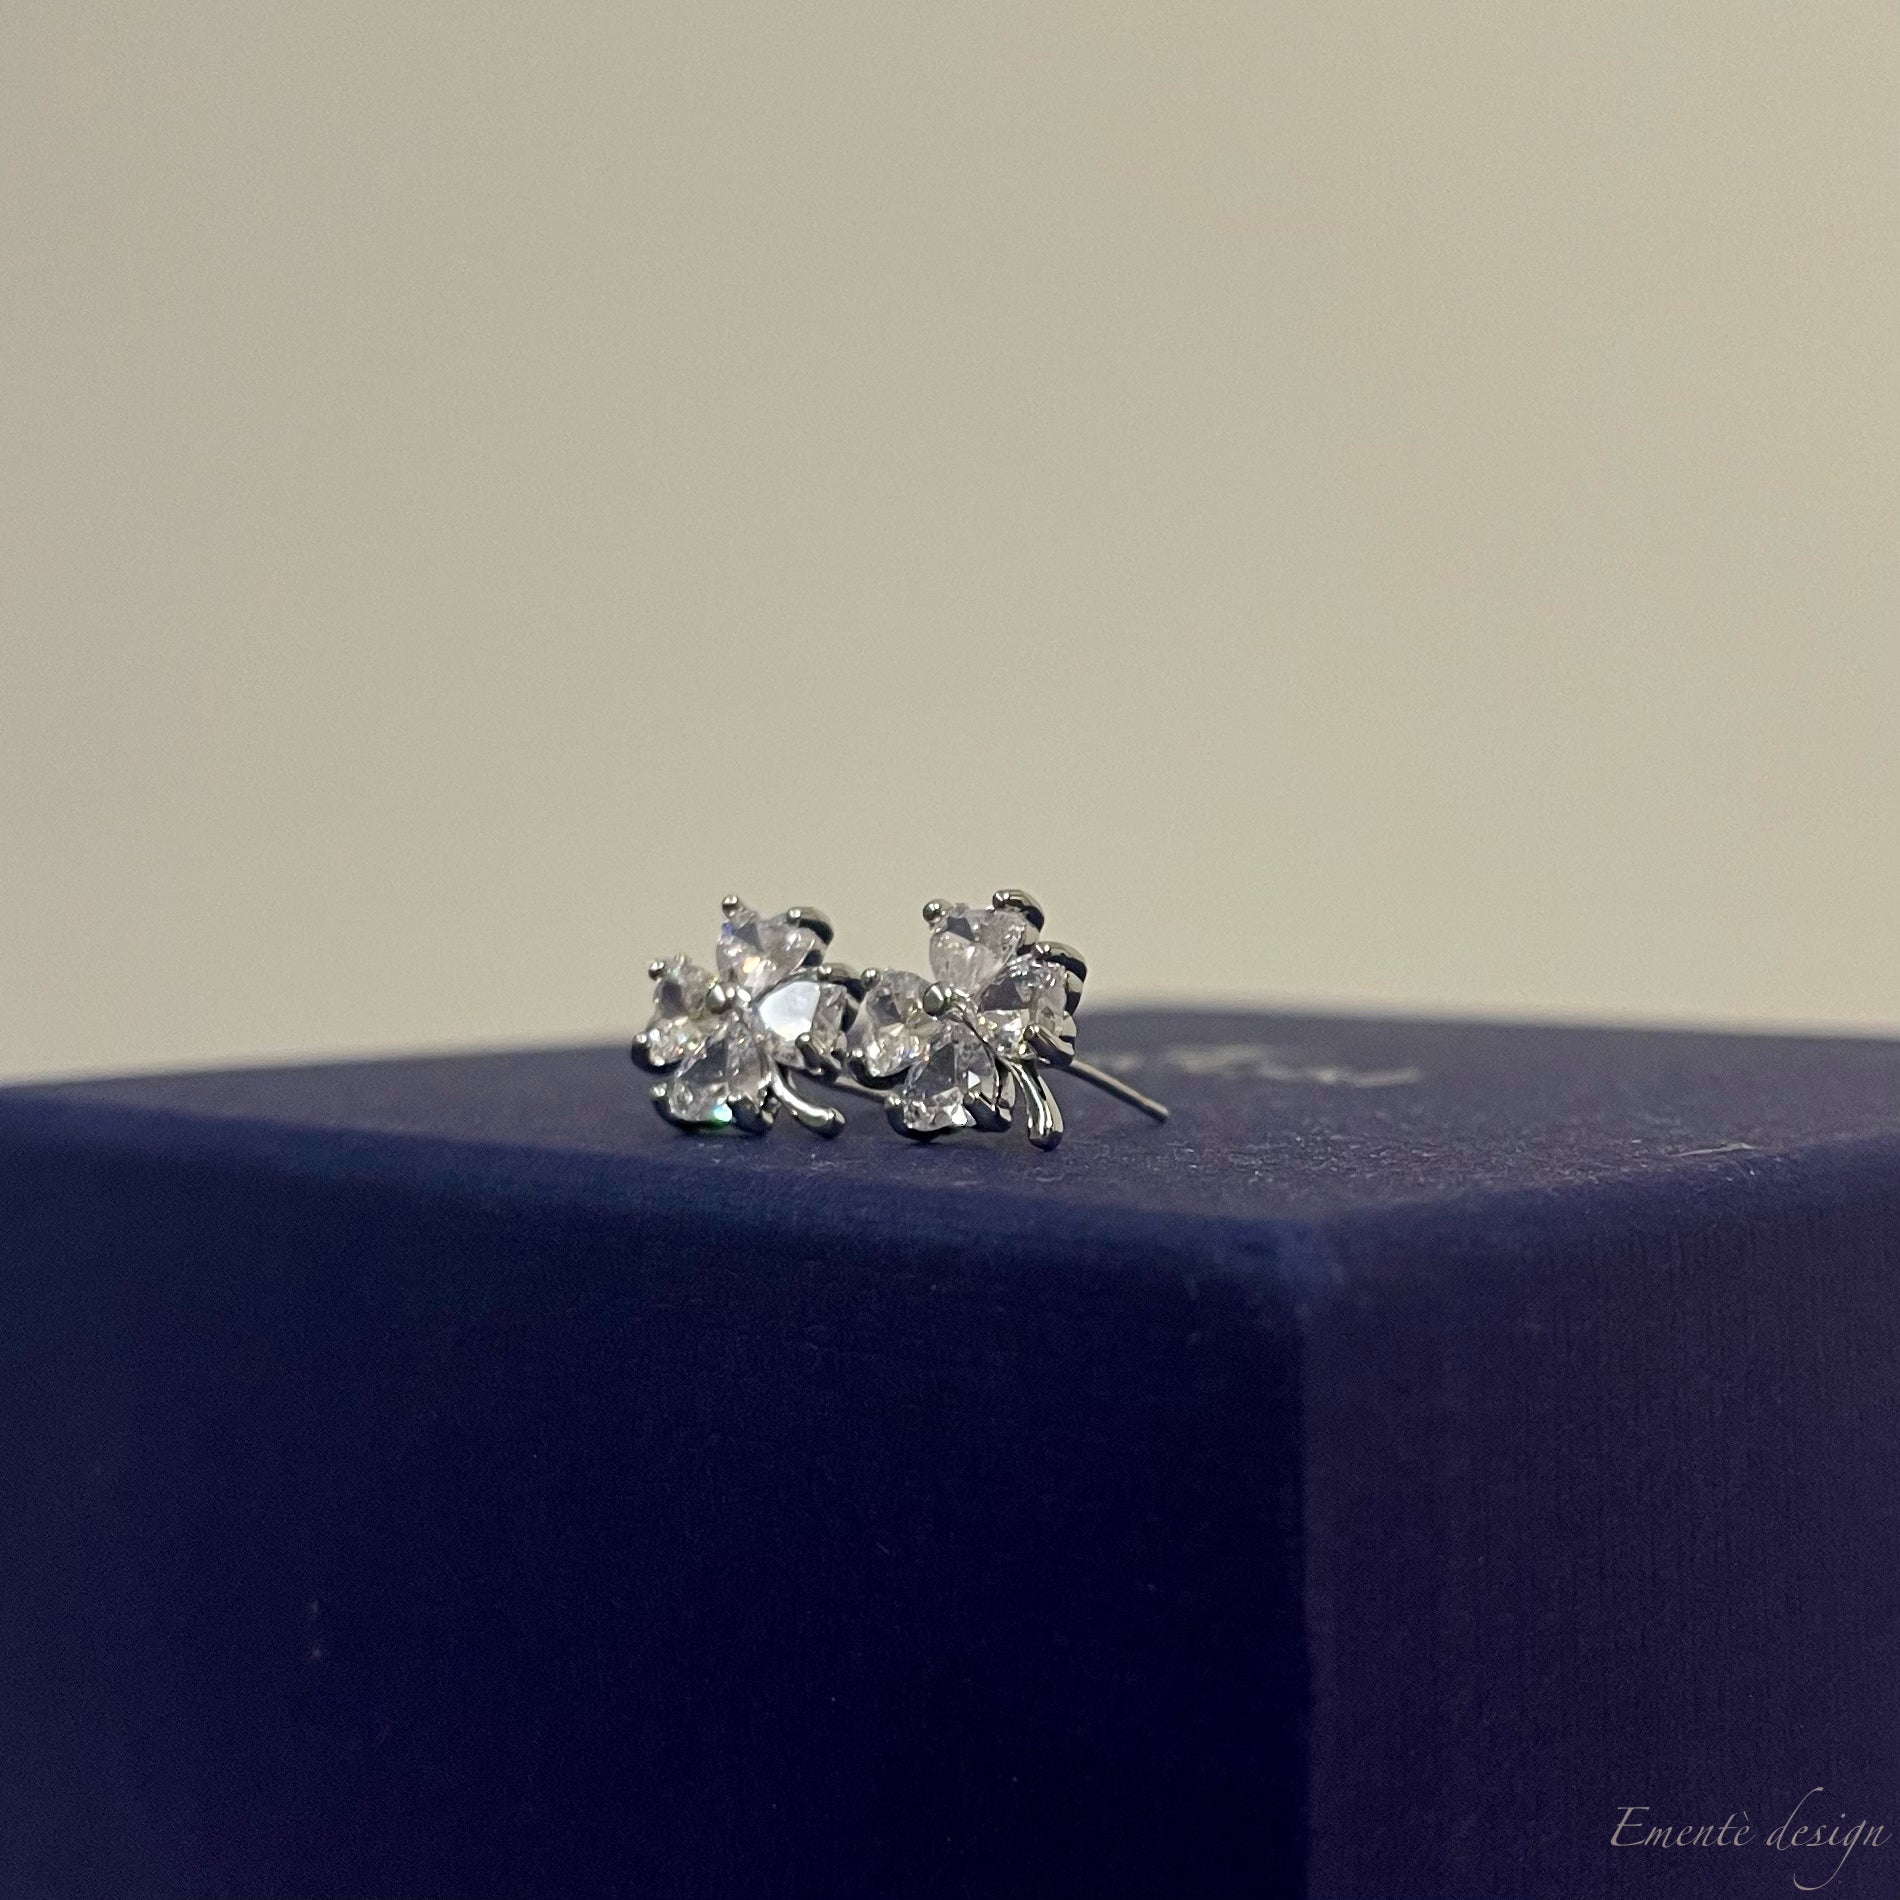 Crystal clover earrings